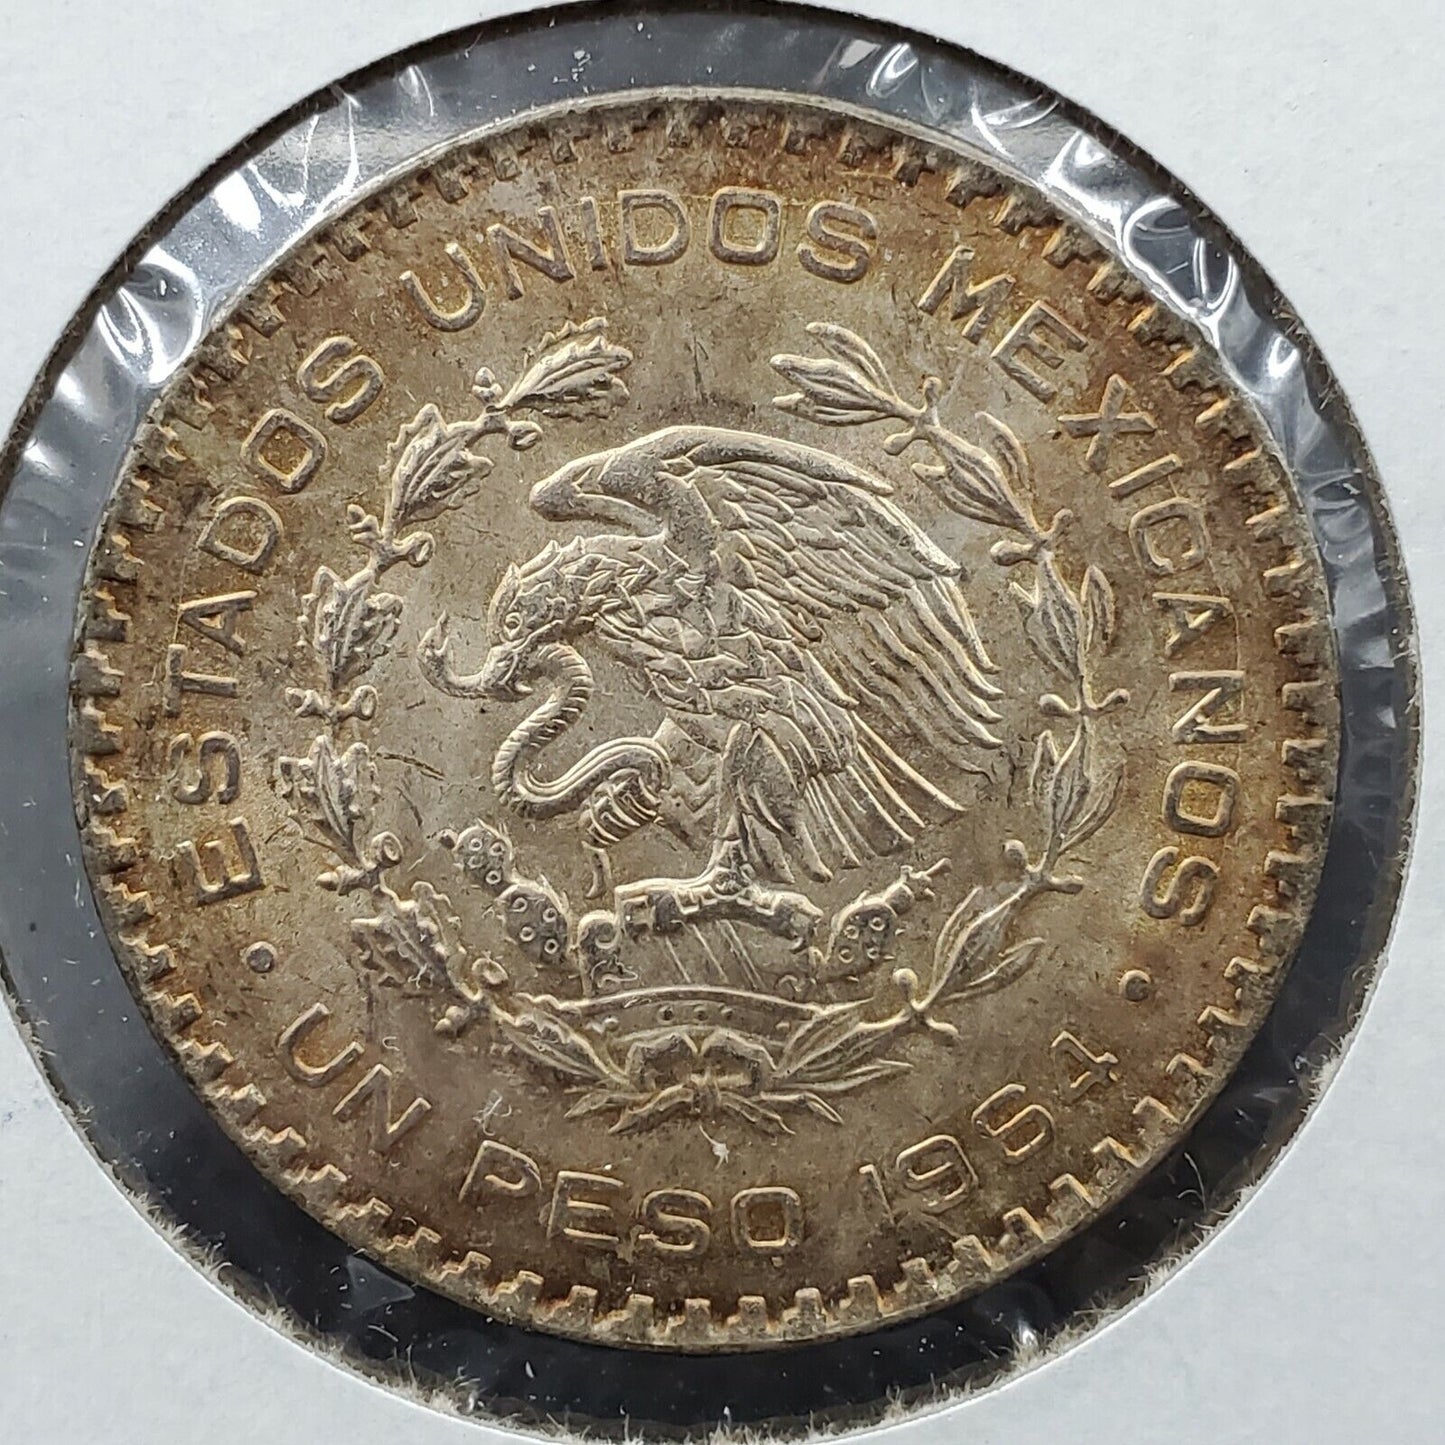 1964 Mo UN 1 Peso Coin PQ BU Uncirculated Mexico Gem Amber Toning PQ Reverse